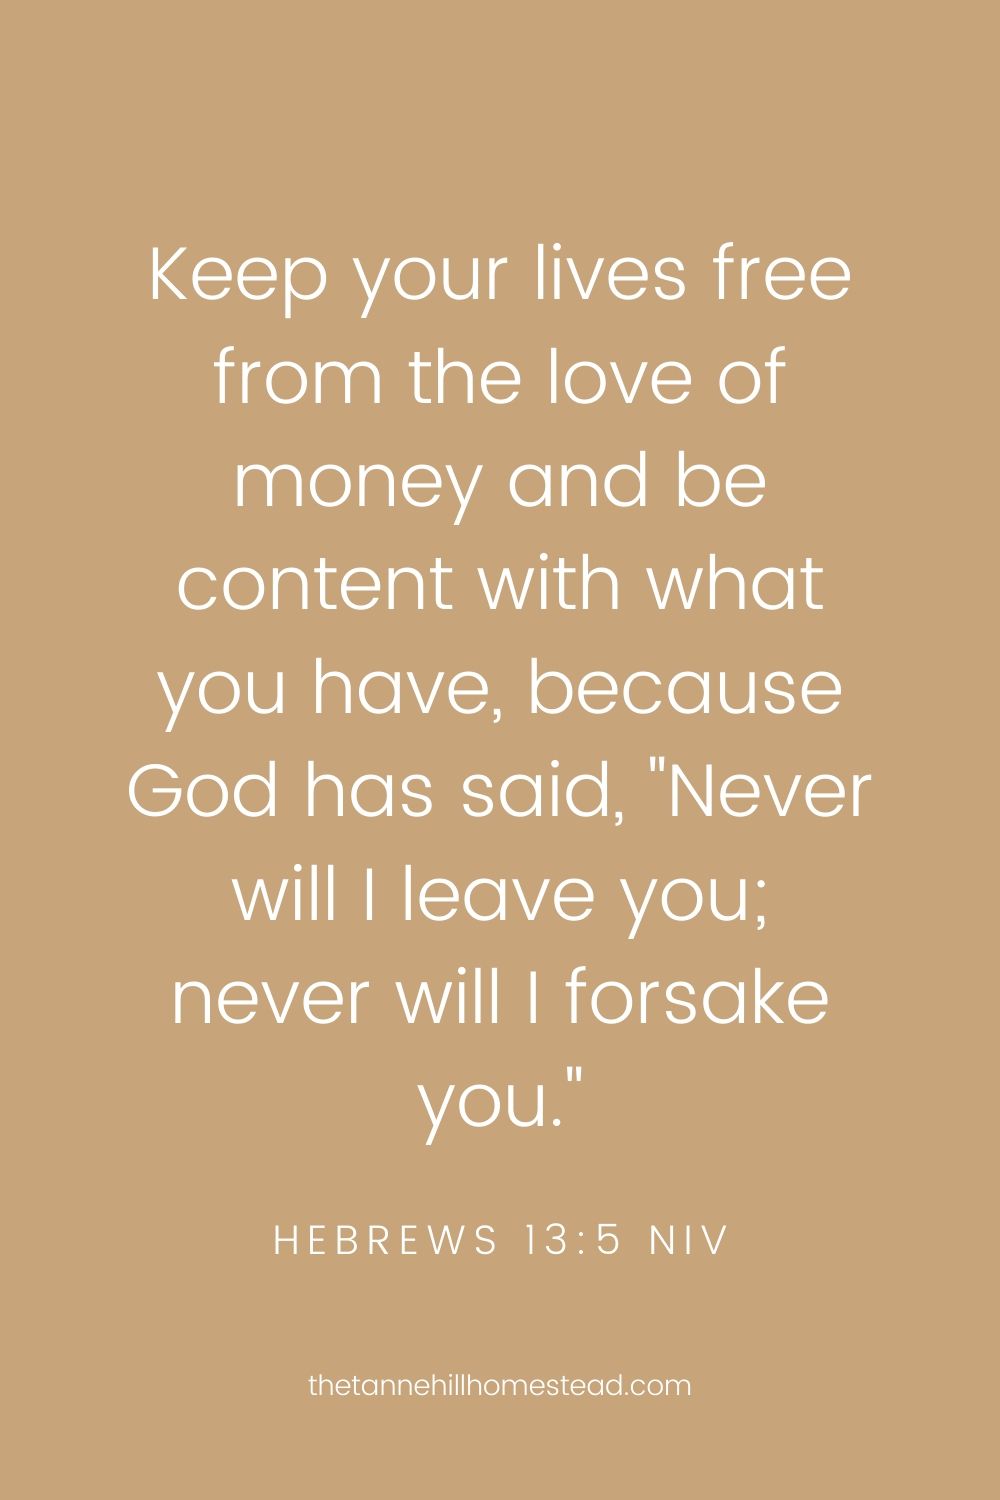 Hebrews 13:5 - Bible verses about contentment